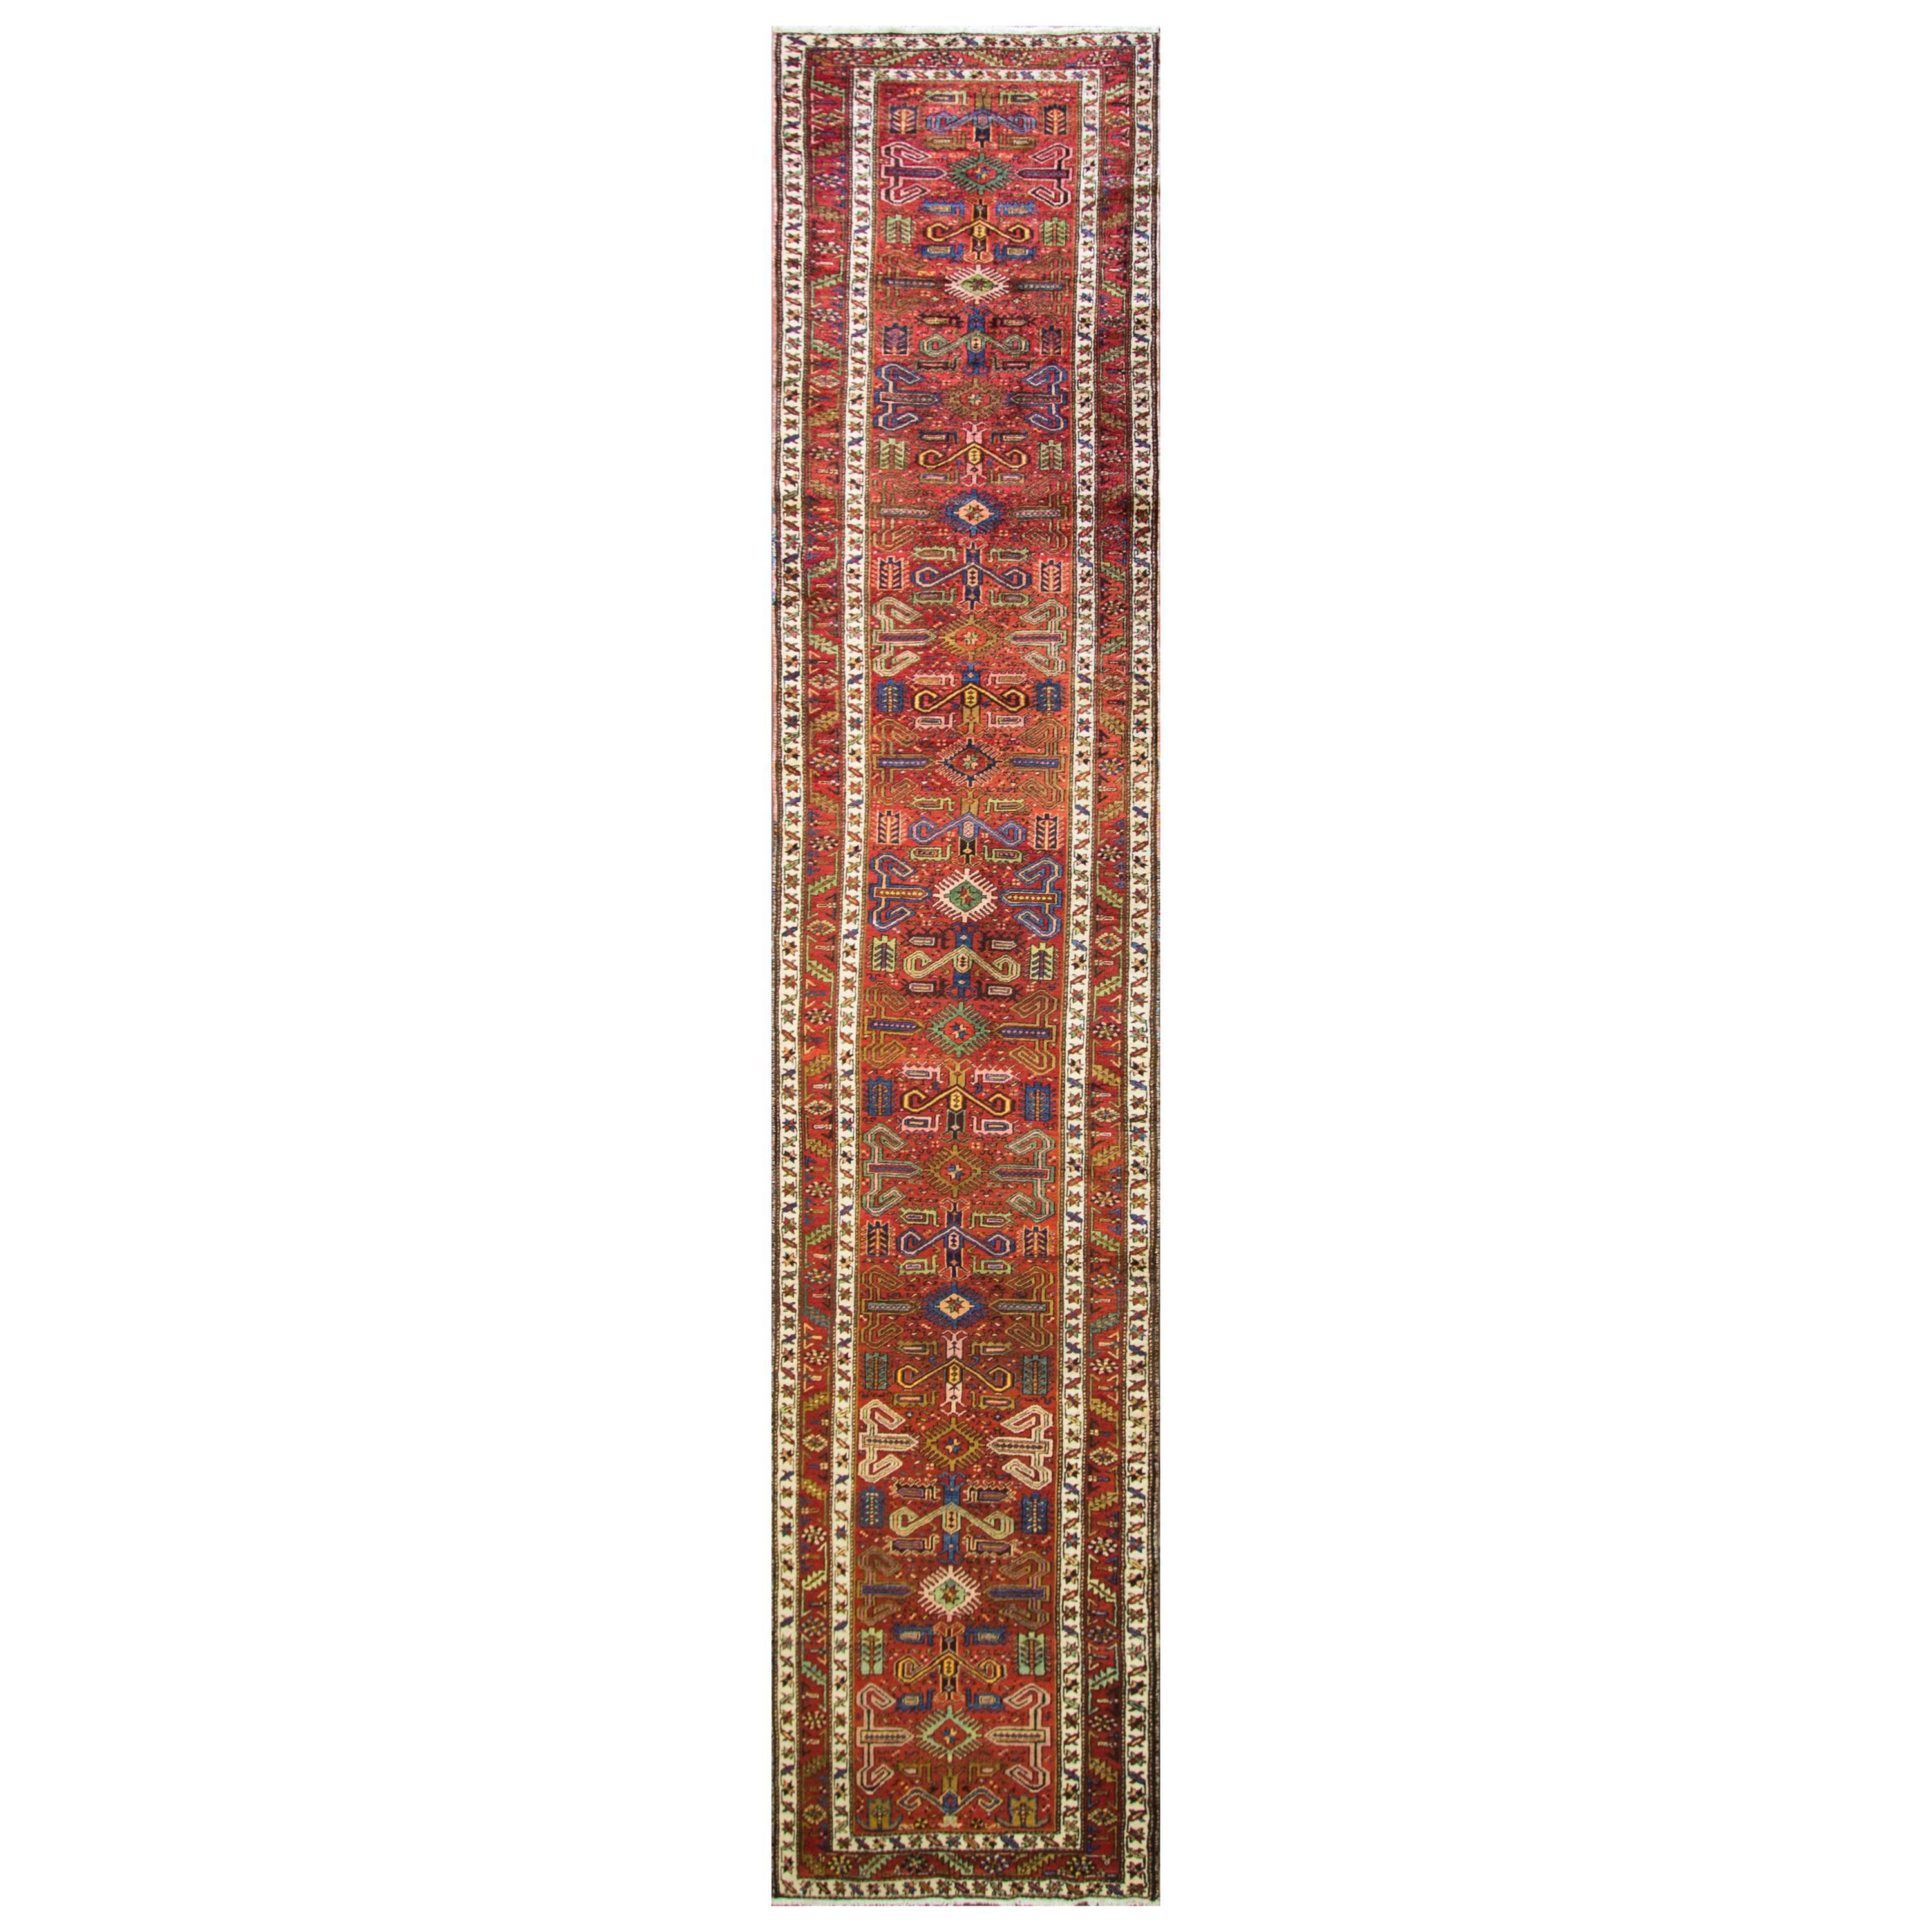  Antique Persian Heriz, Serapi Runner,  3'3" x 18'3" Free Shipping